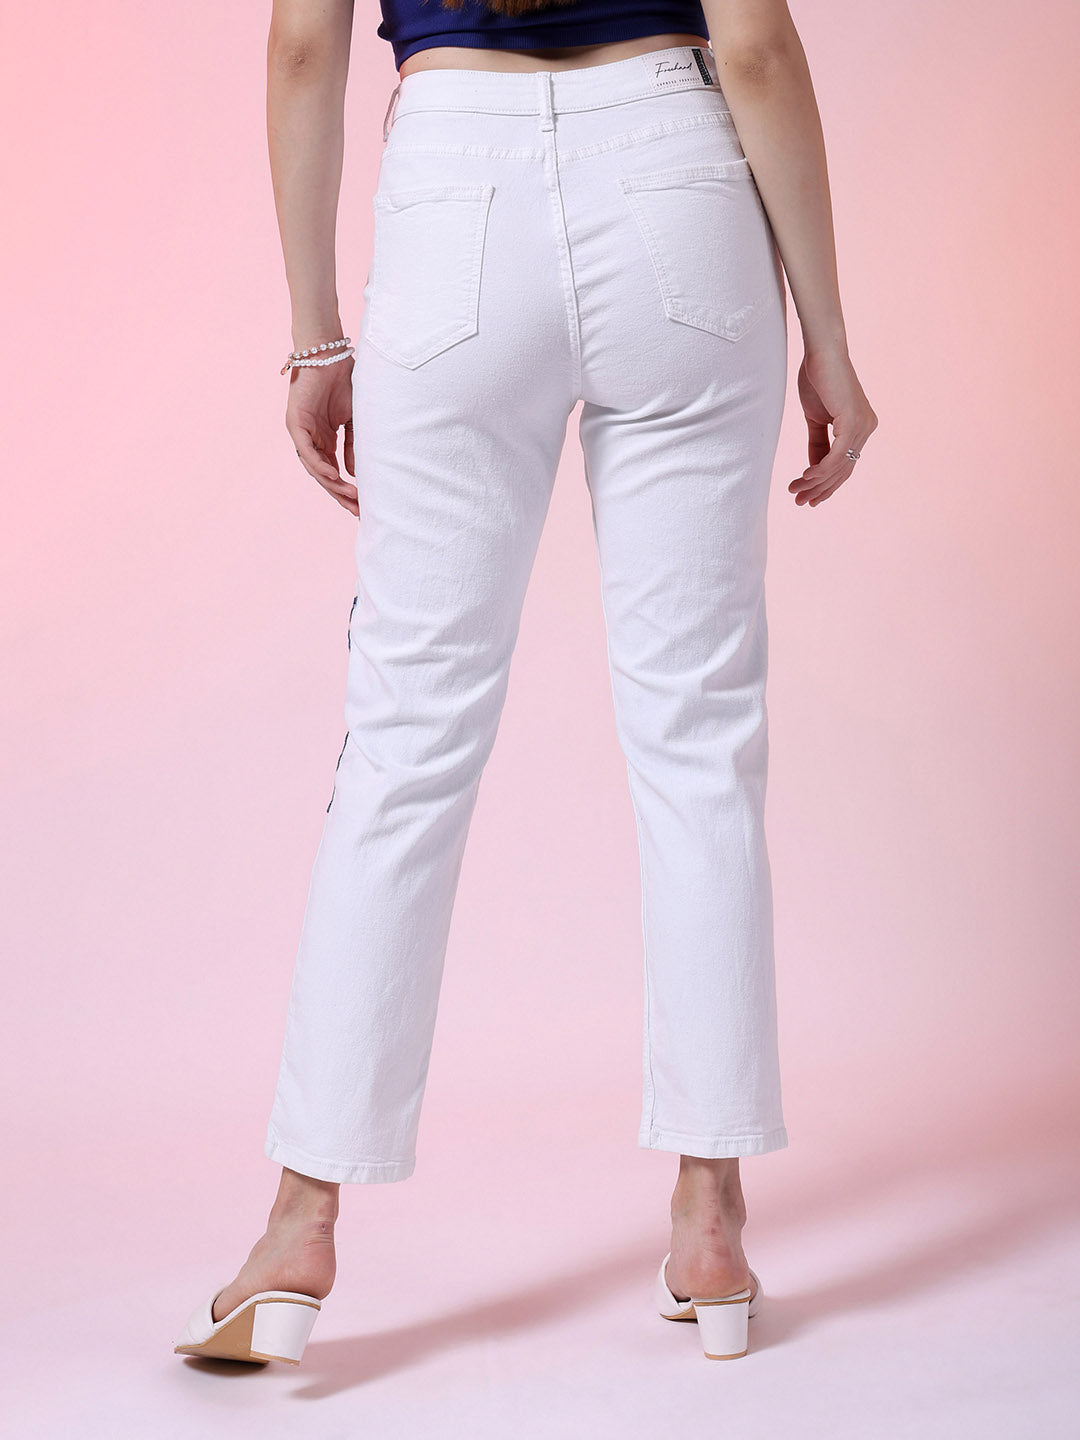 Shop Women Straight Fit Jeans Online.